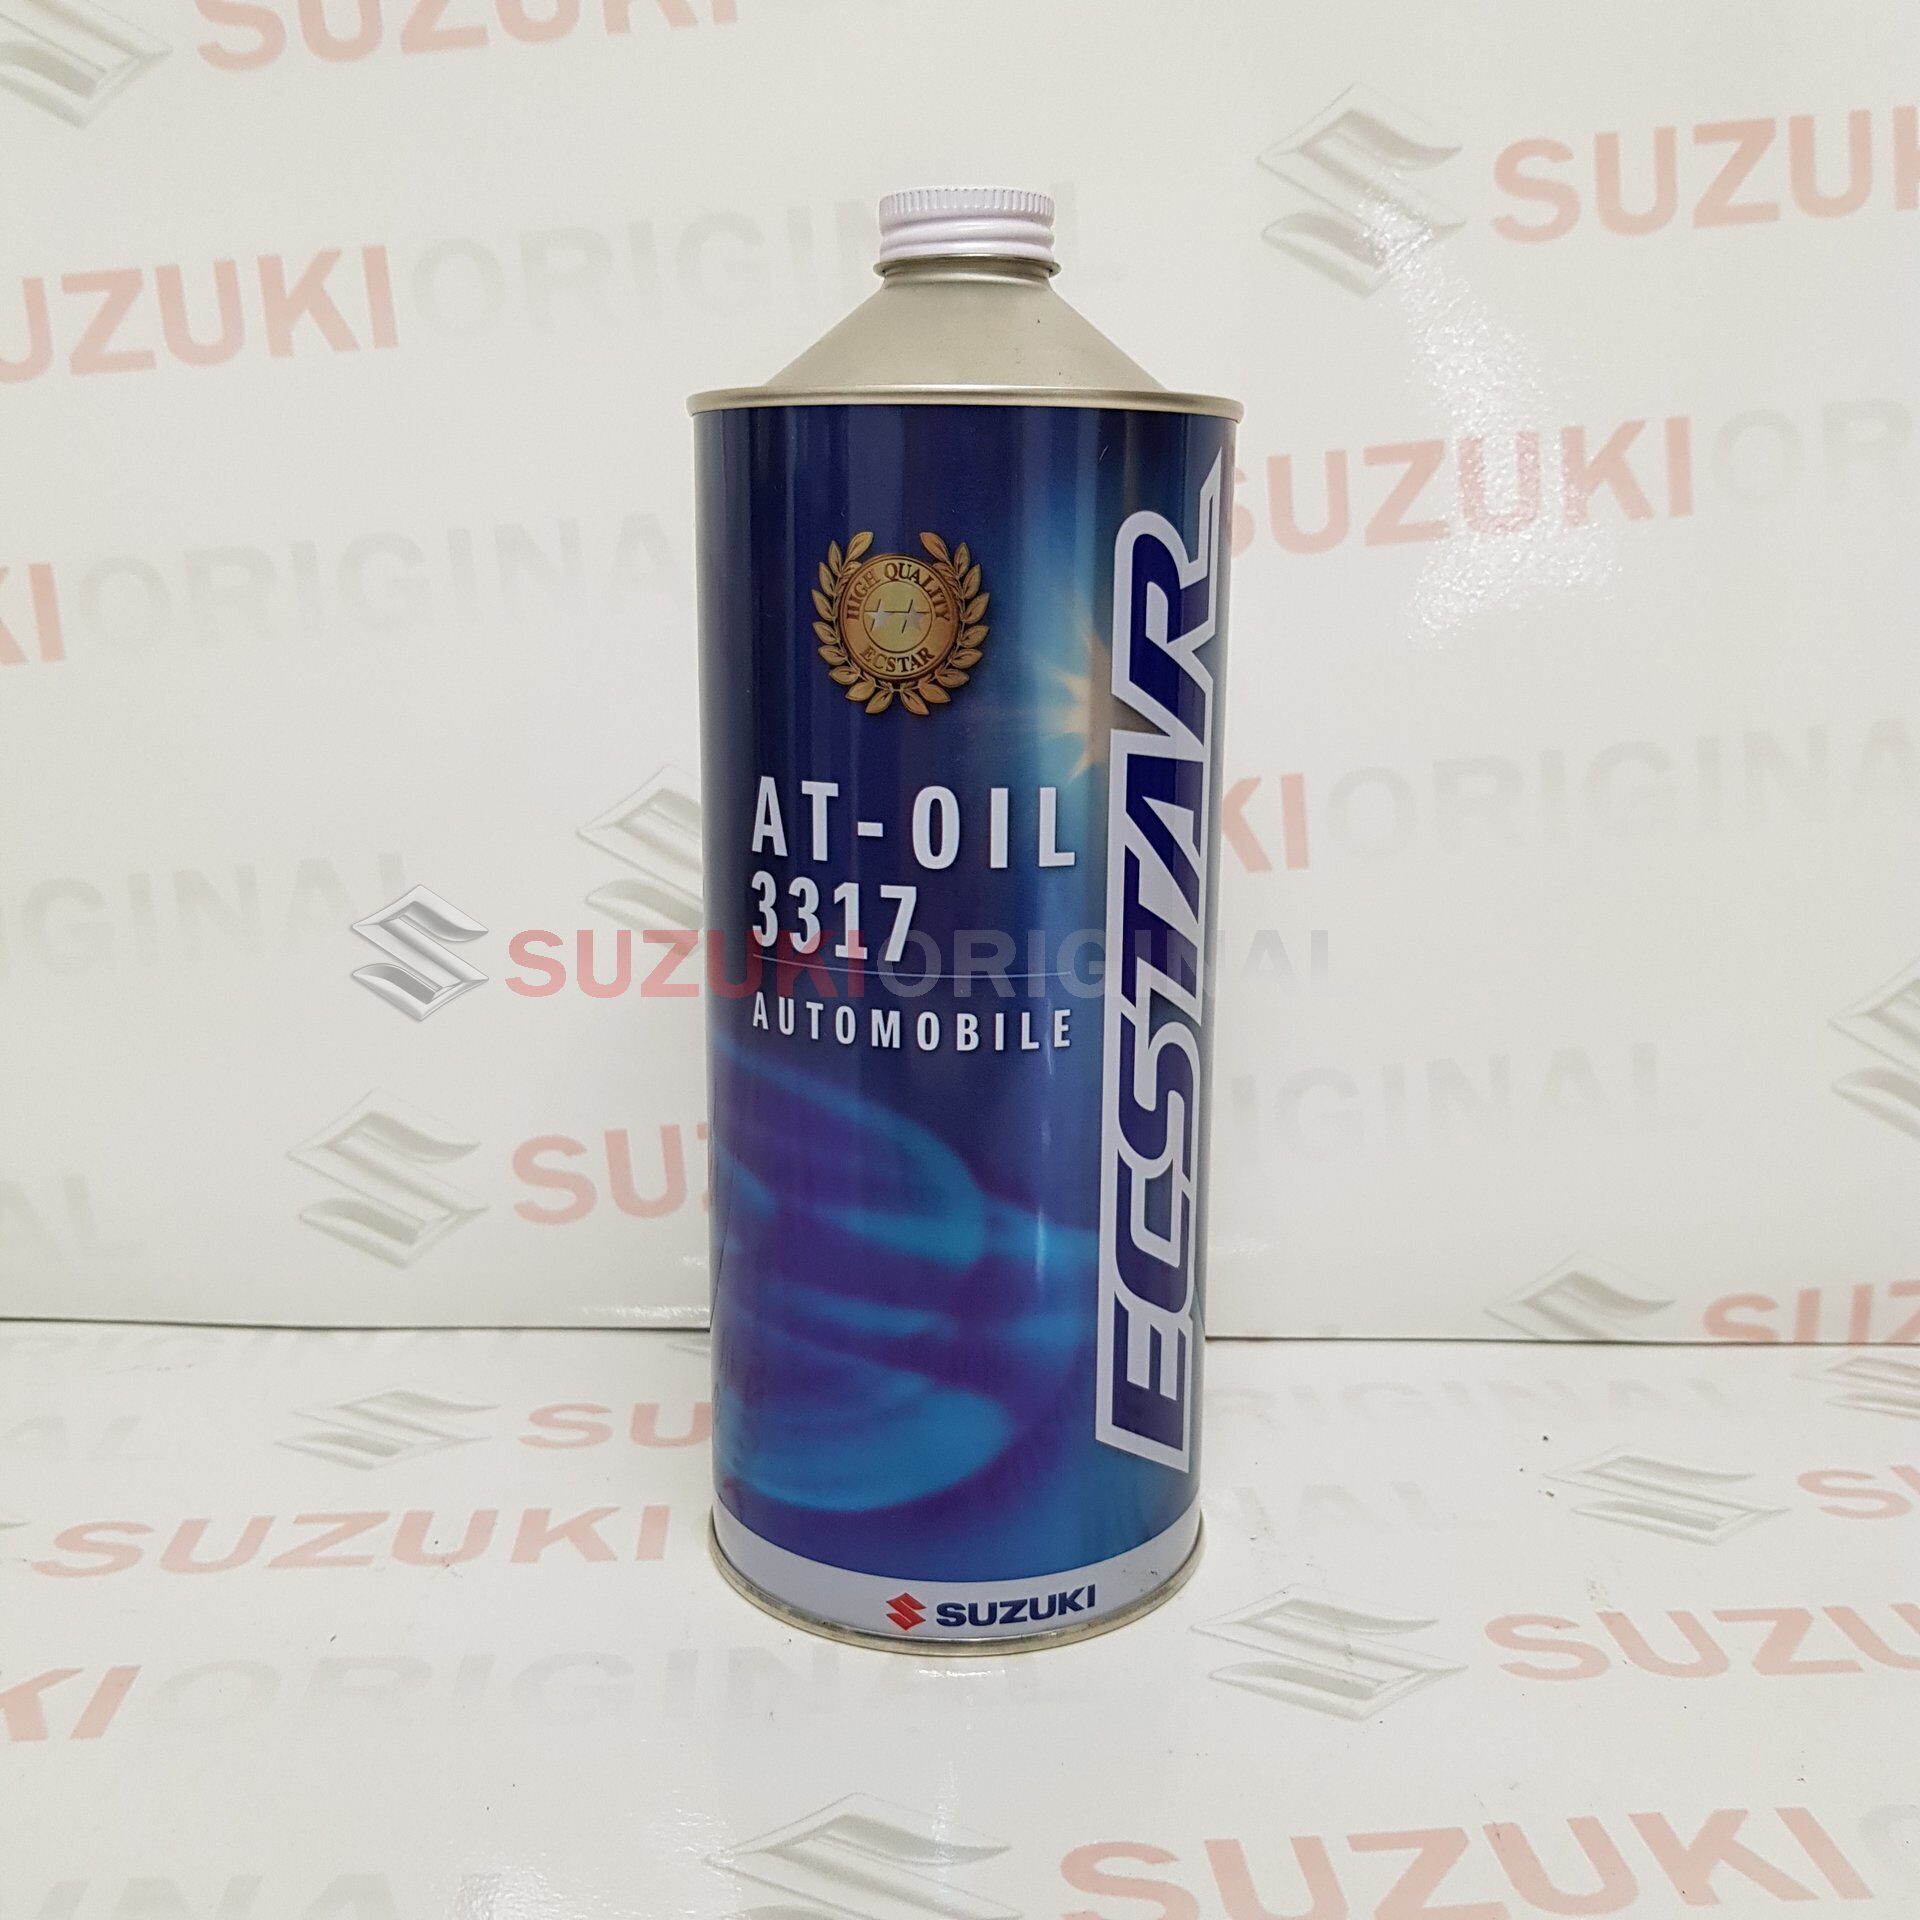 Suzuki ATF 3317. ATF 3317 Suzuki аналоги. Масло Судзуки 3317. Оригинальное Suzuki ATF 3317. Suzuki atf